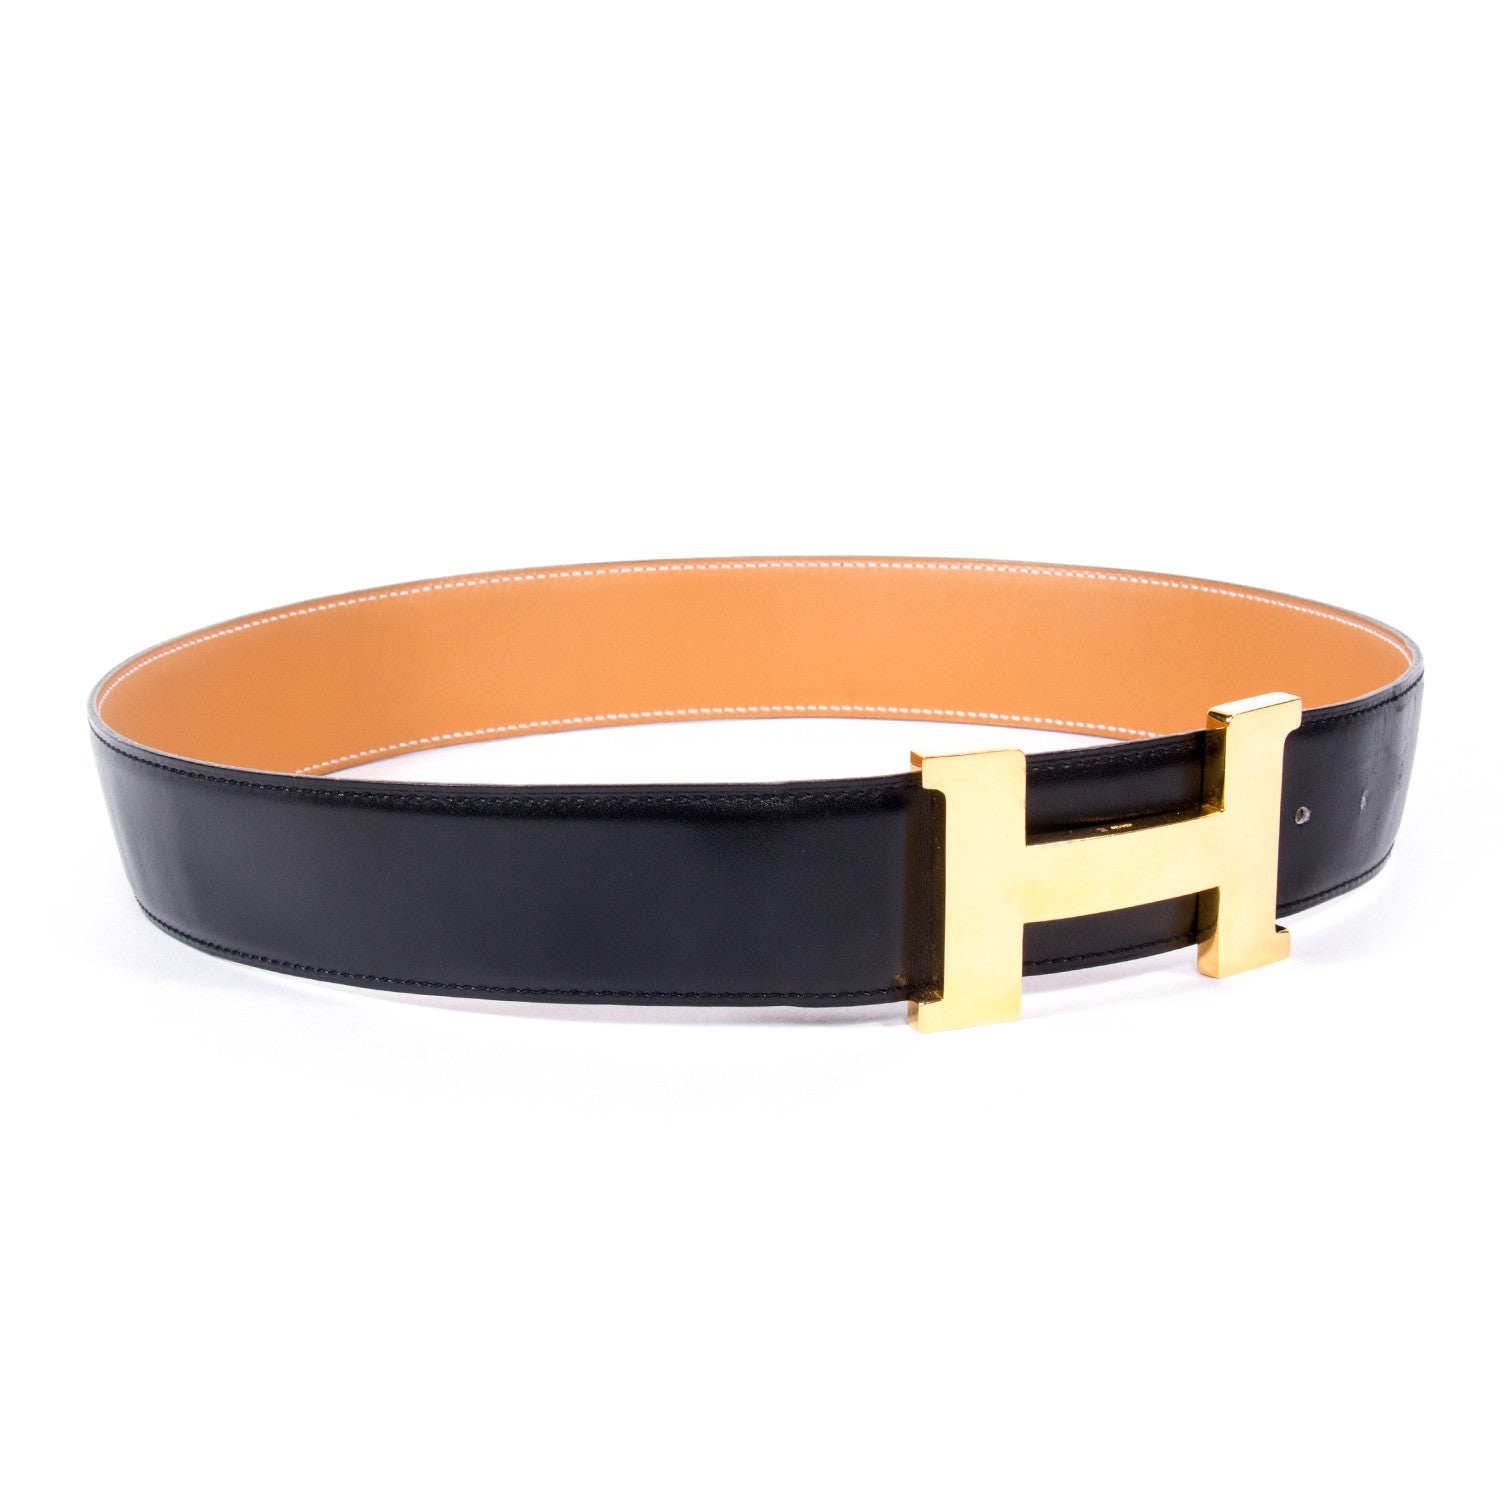 Shop authentic Hermes H Belt at revogue for just USD 629.00